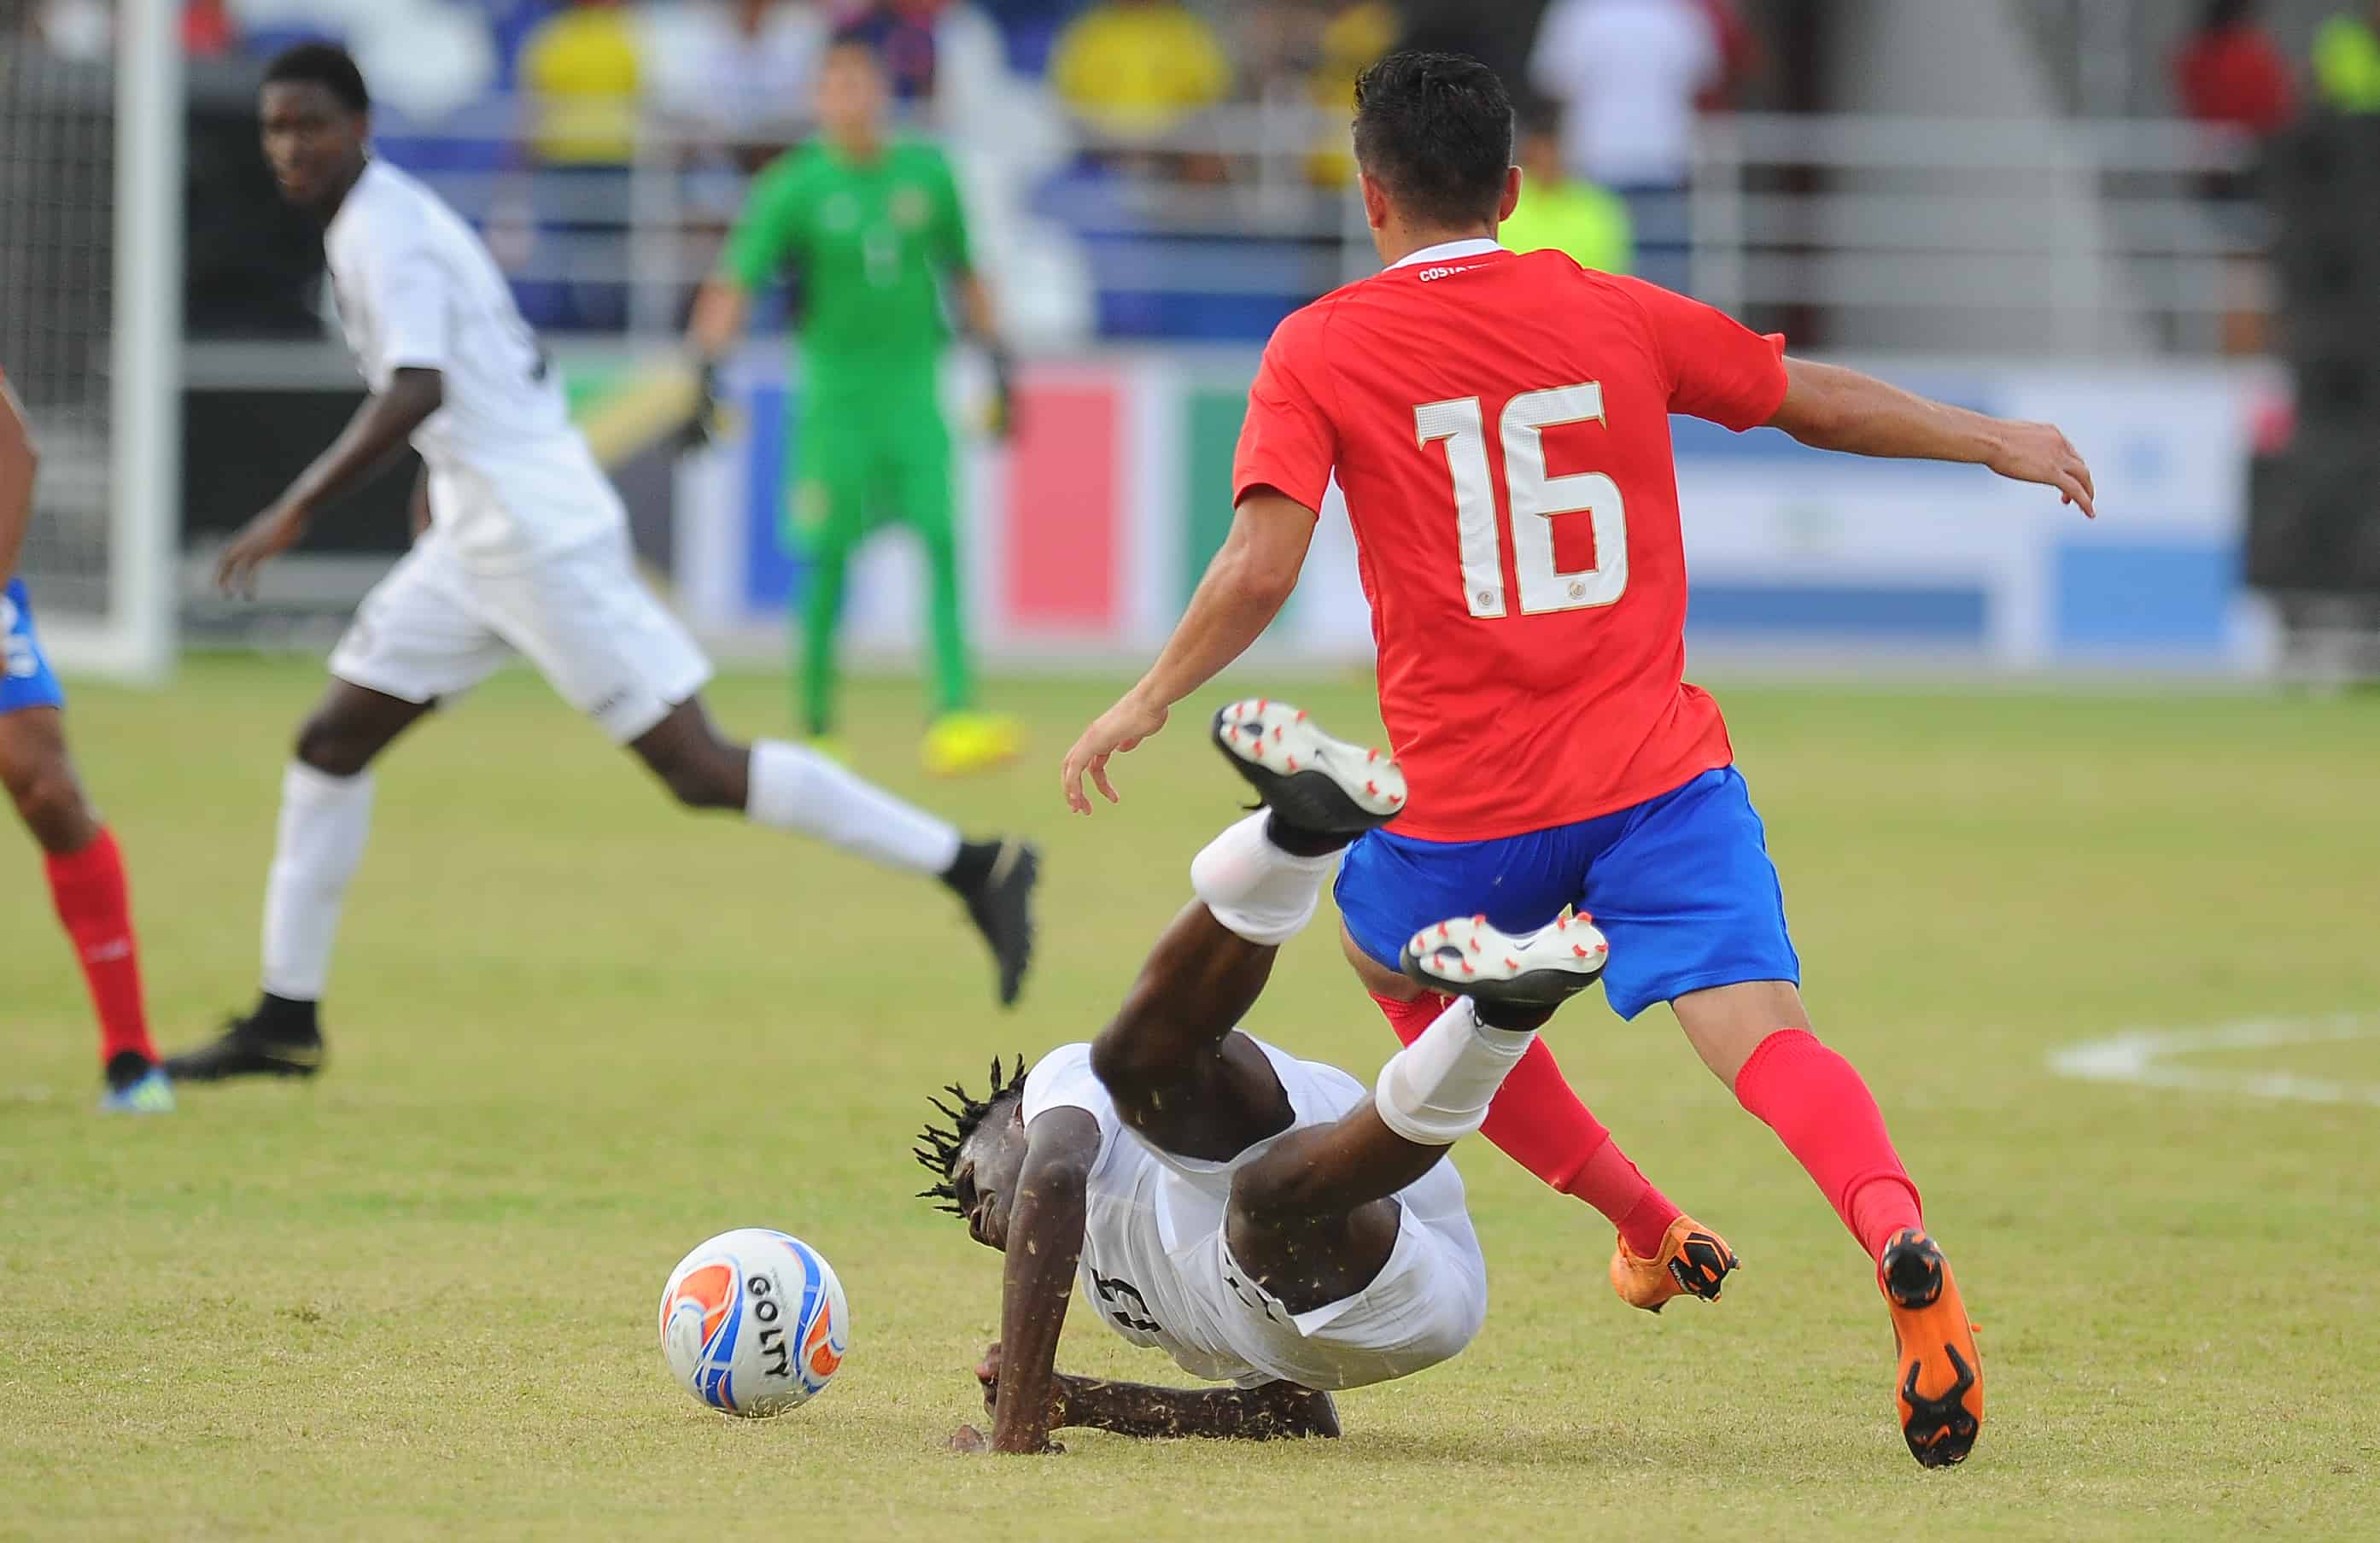 Men's sub-21 soccer team face Honduras in must-win match today, women